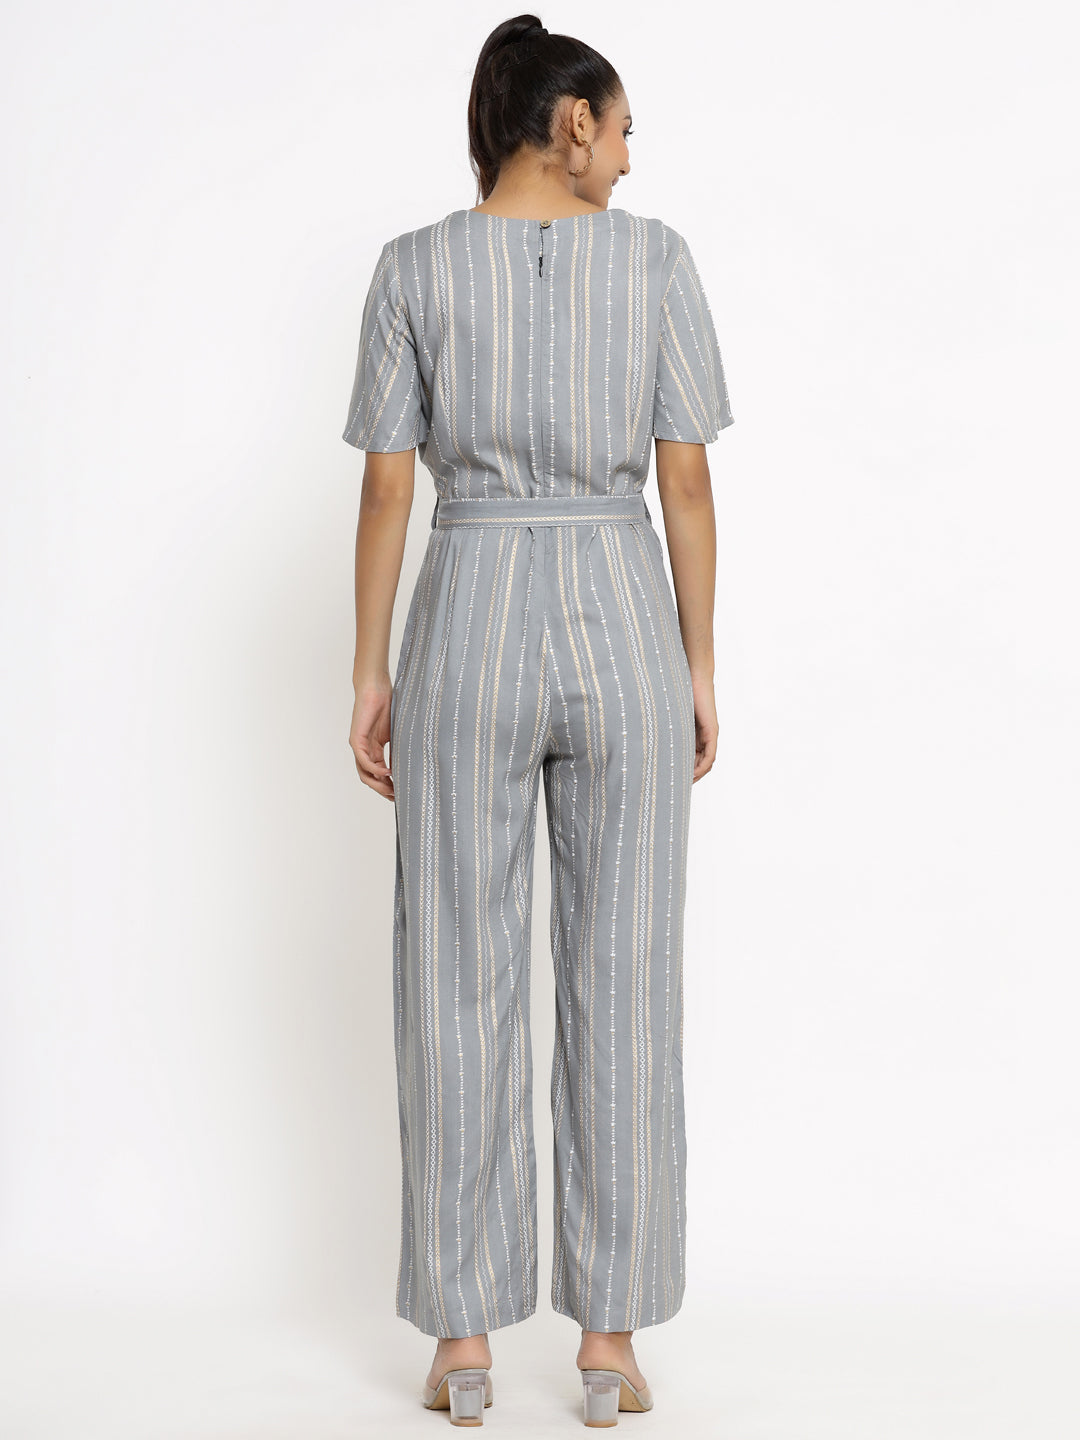 Women's Self Desgin Rayon Fabric Jumpsuit Grey Color - Kipek